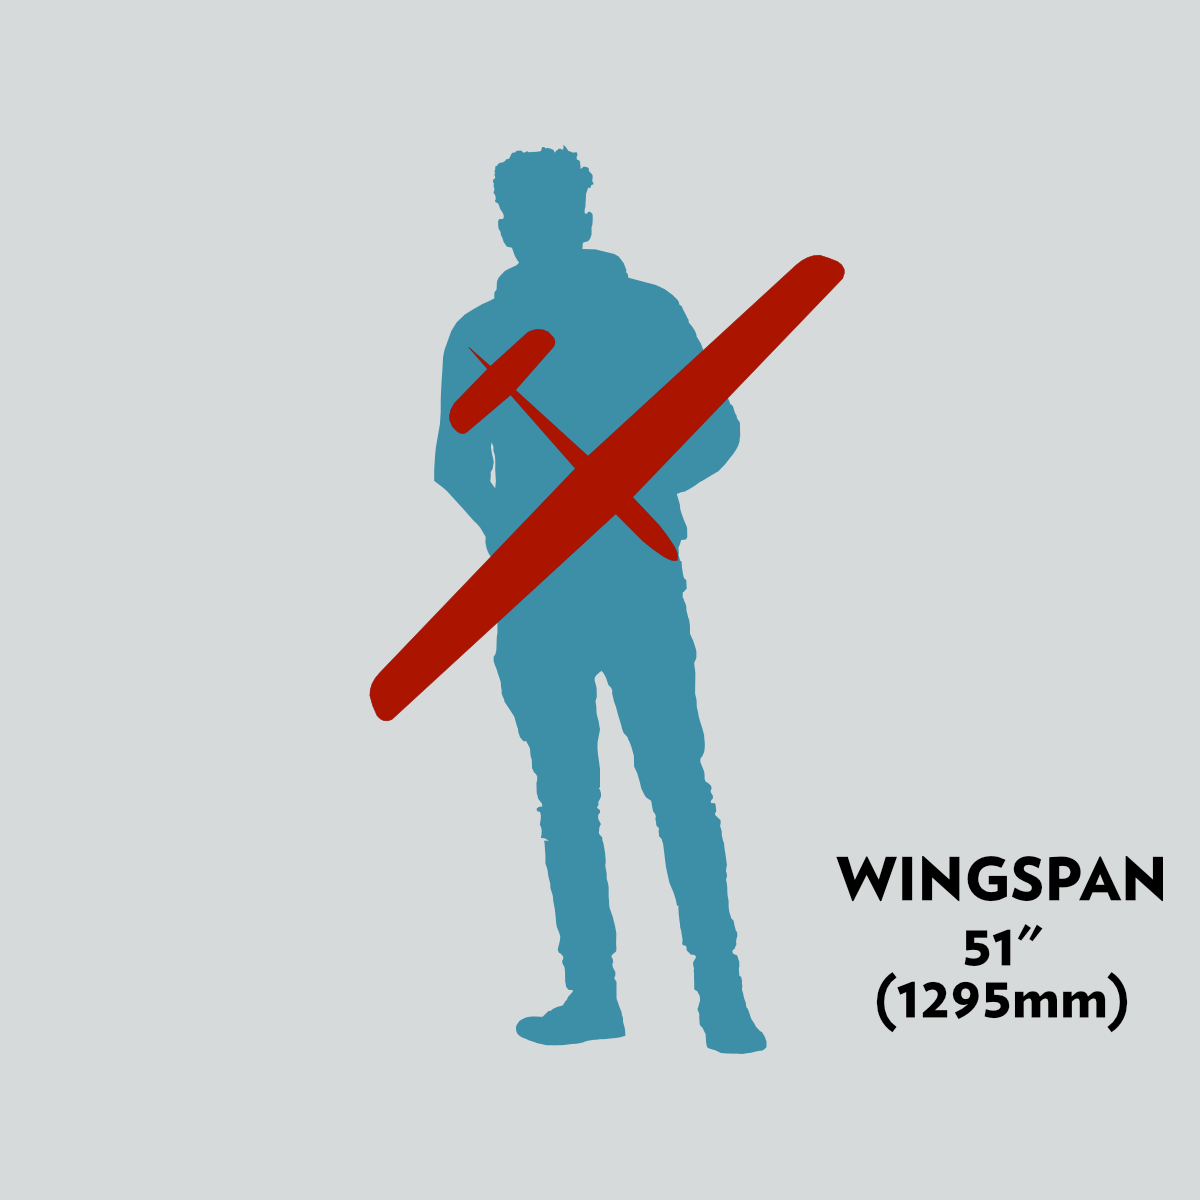 51" (1295mm) wingspan